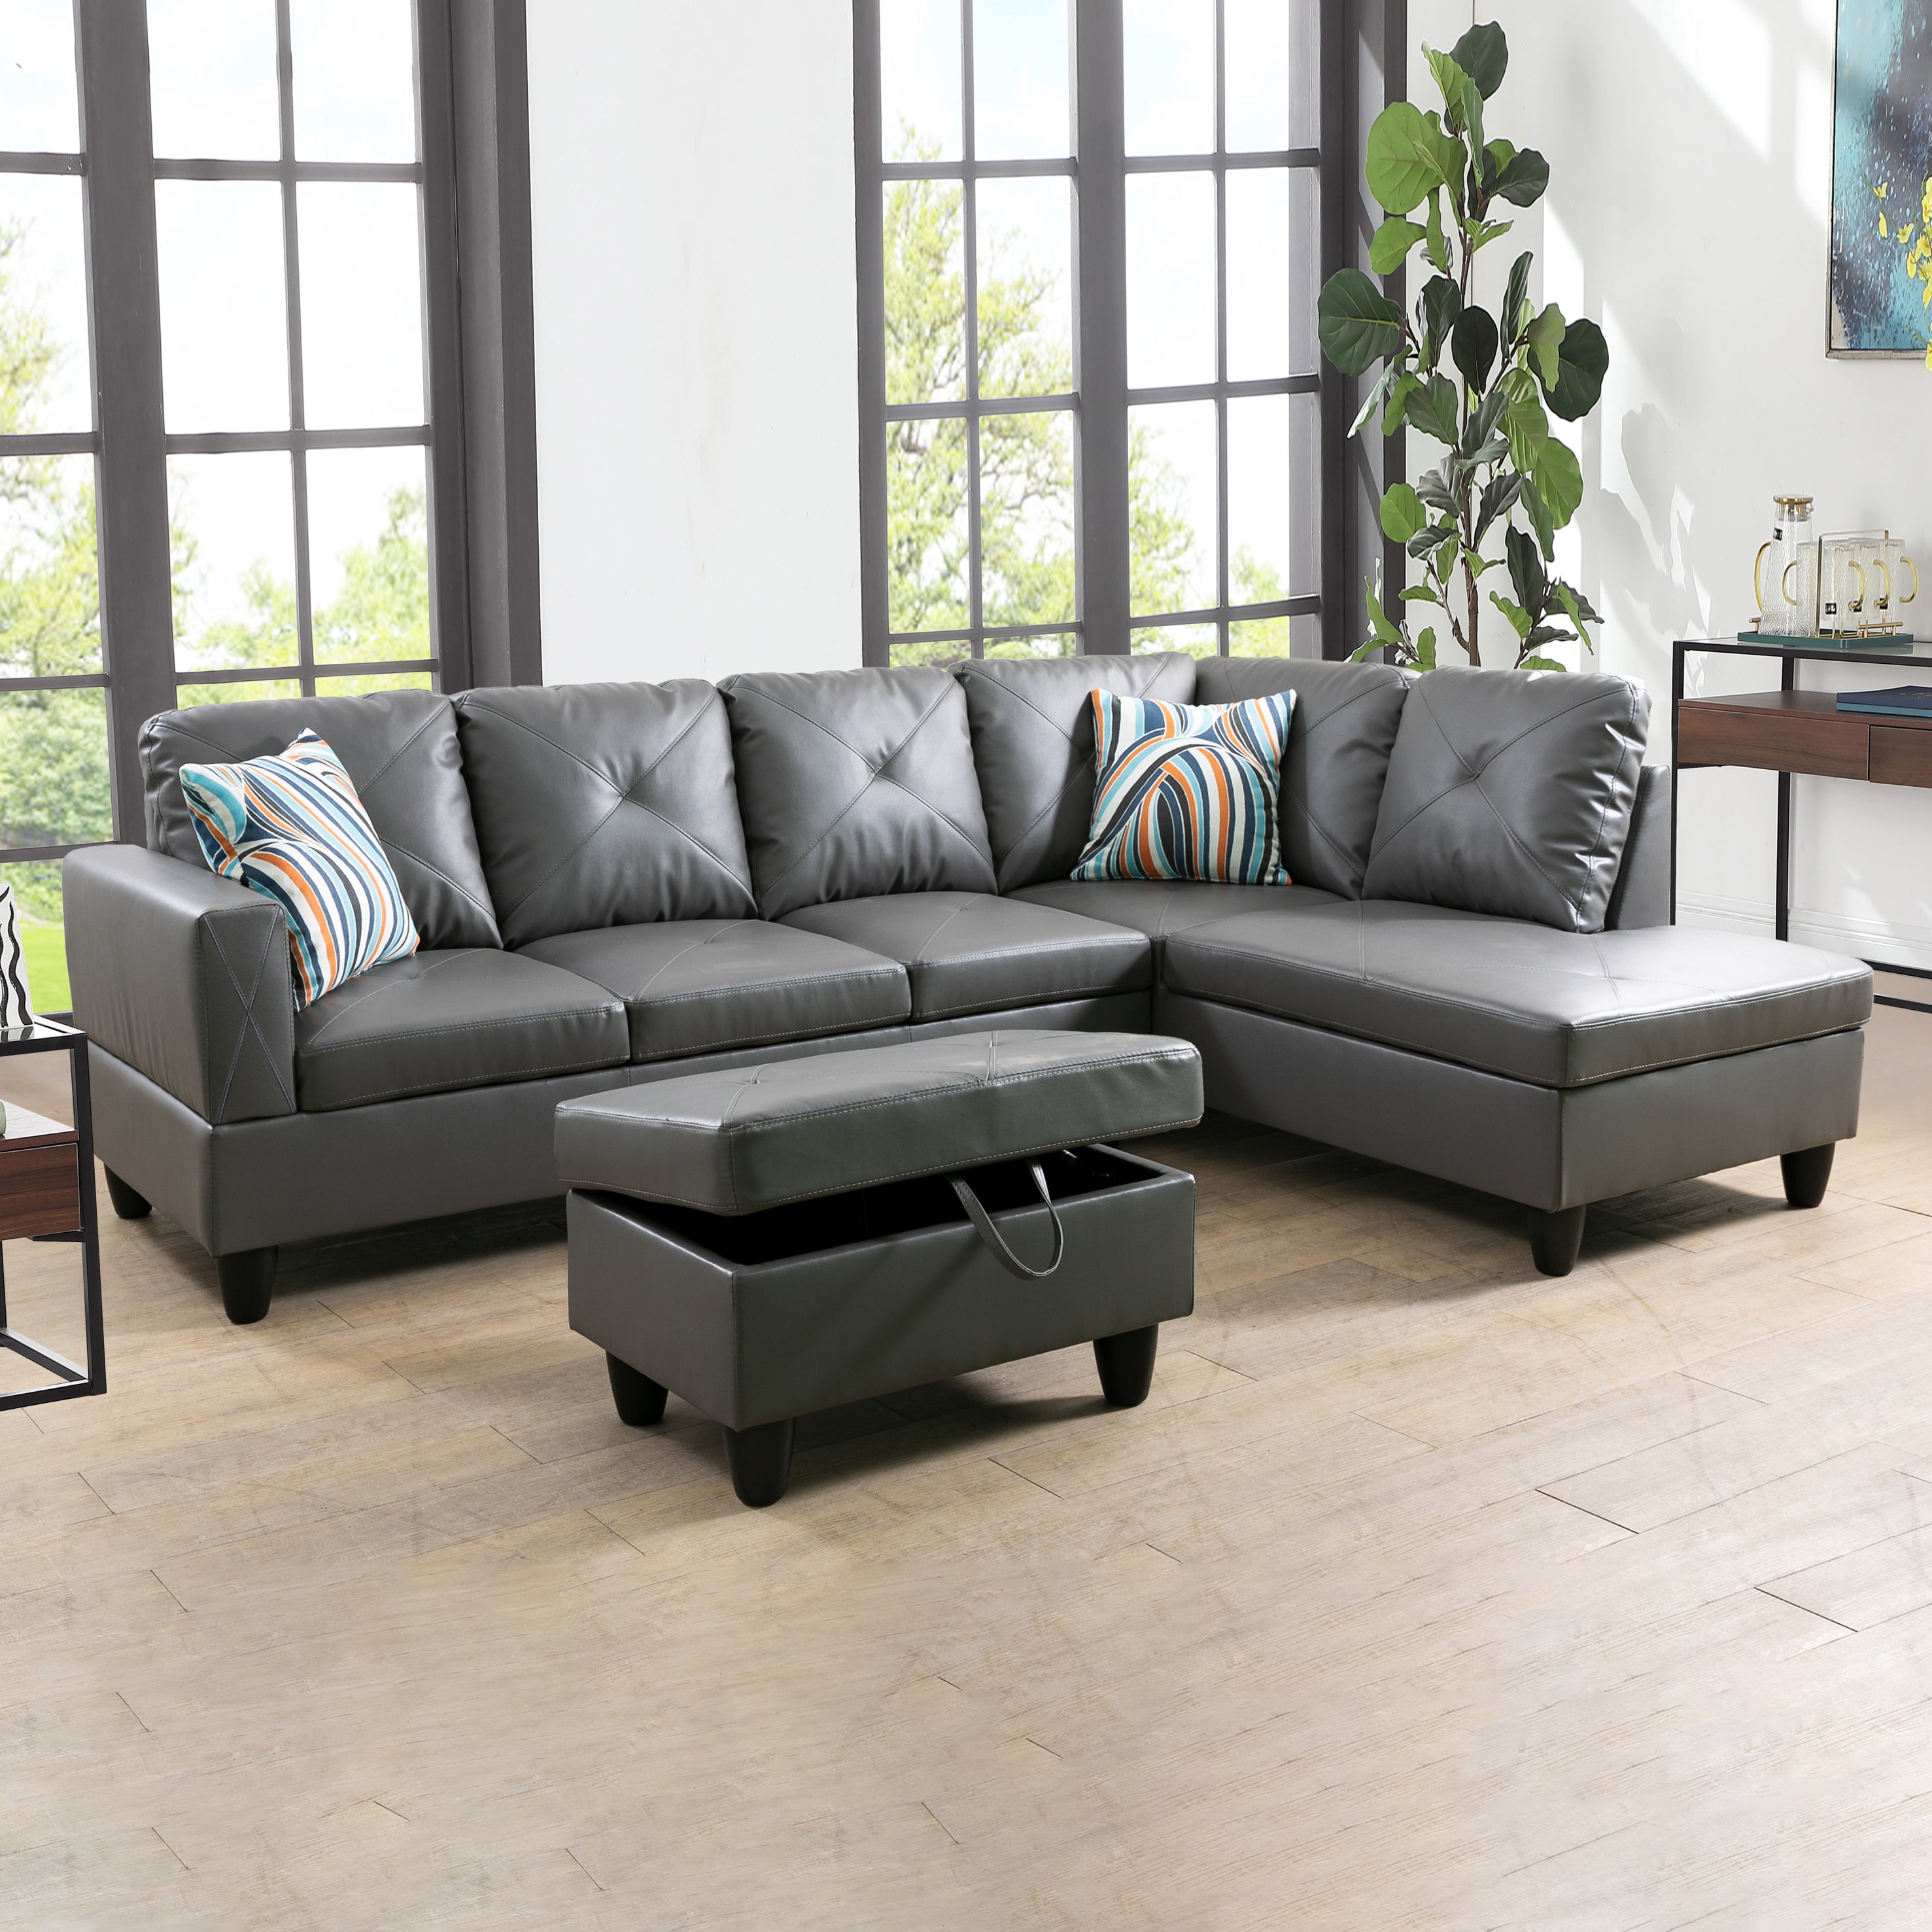 Ainehome Grey L-Shaped Faux Leather Sofa Set